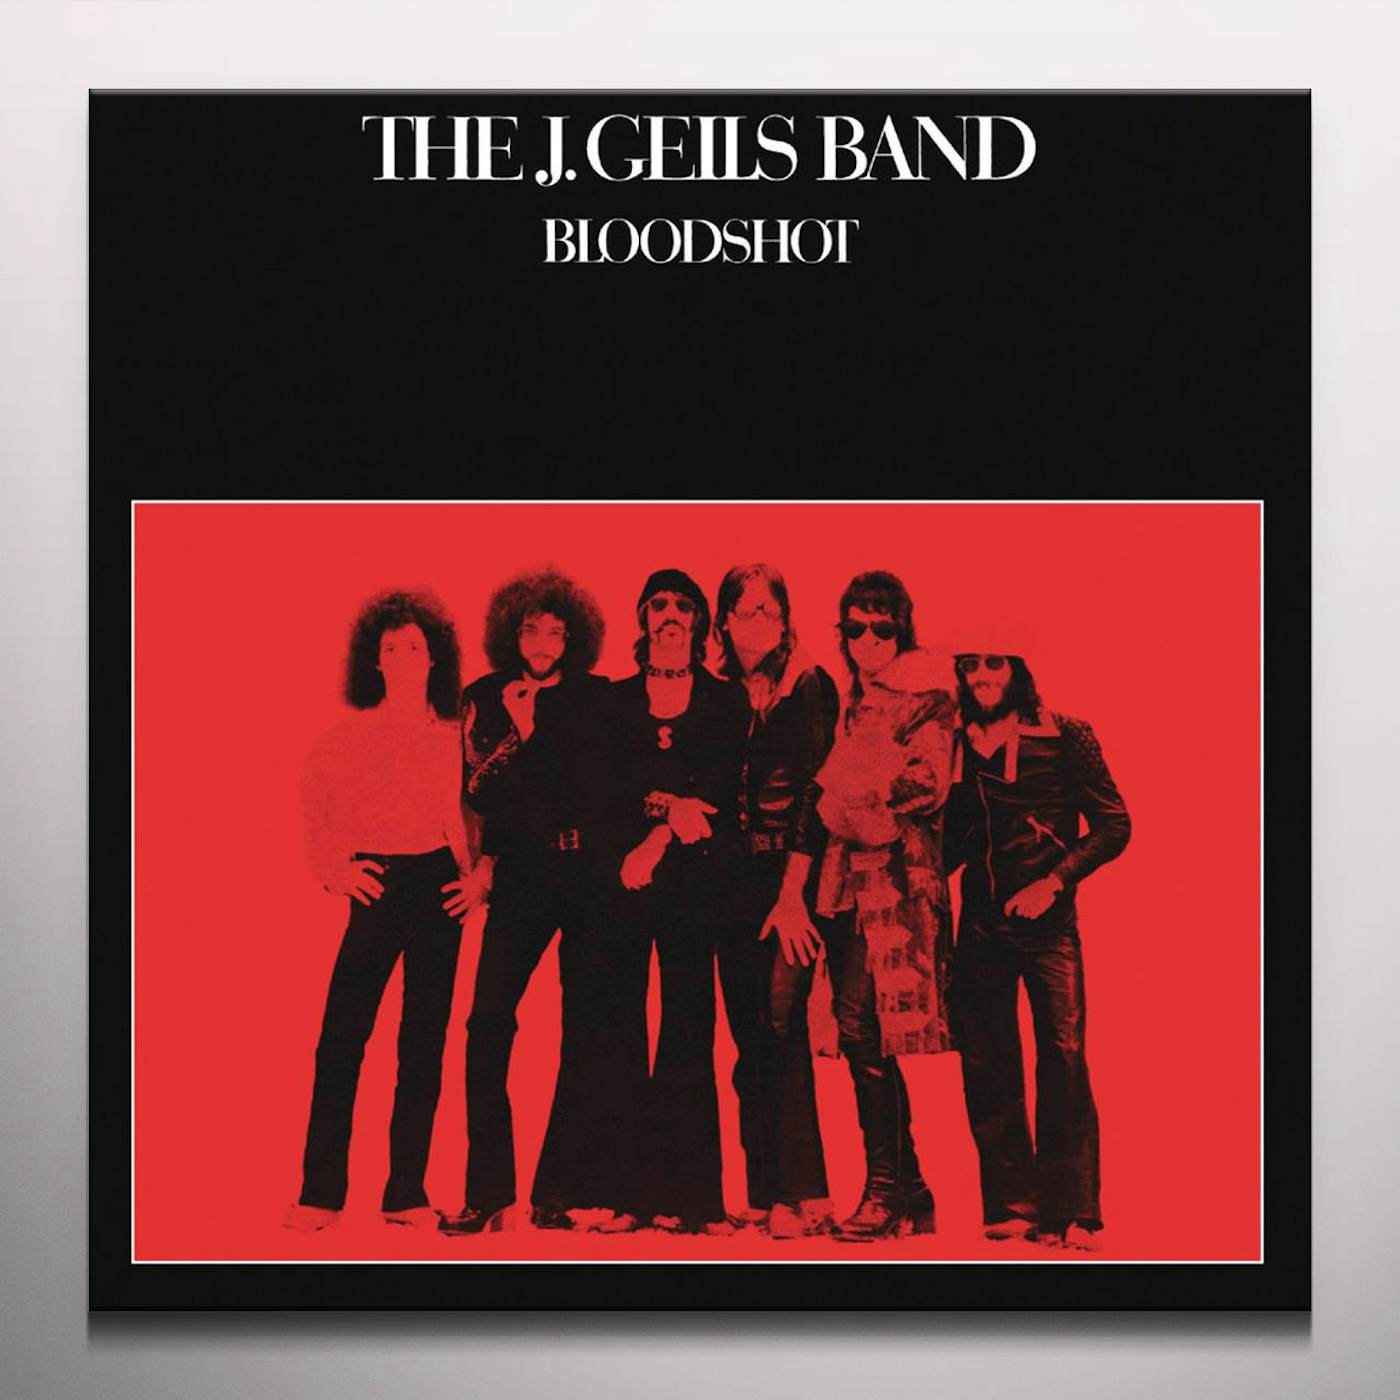 The J. Geils Band Bloodshot Vinyl Record